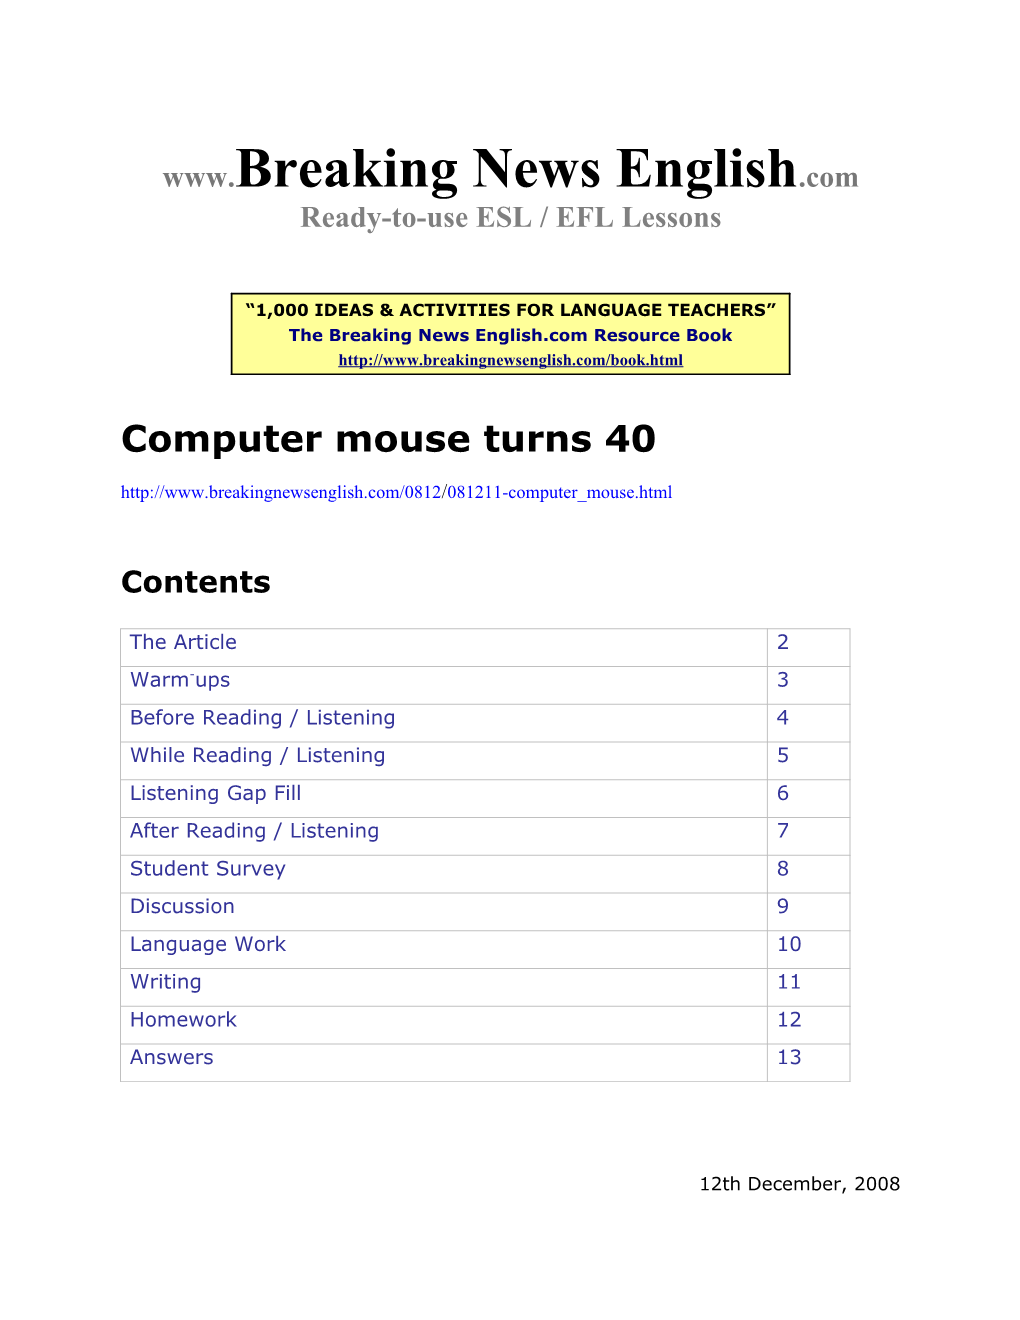 ESL Lesson: Computer Mouse Turns 40